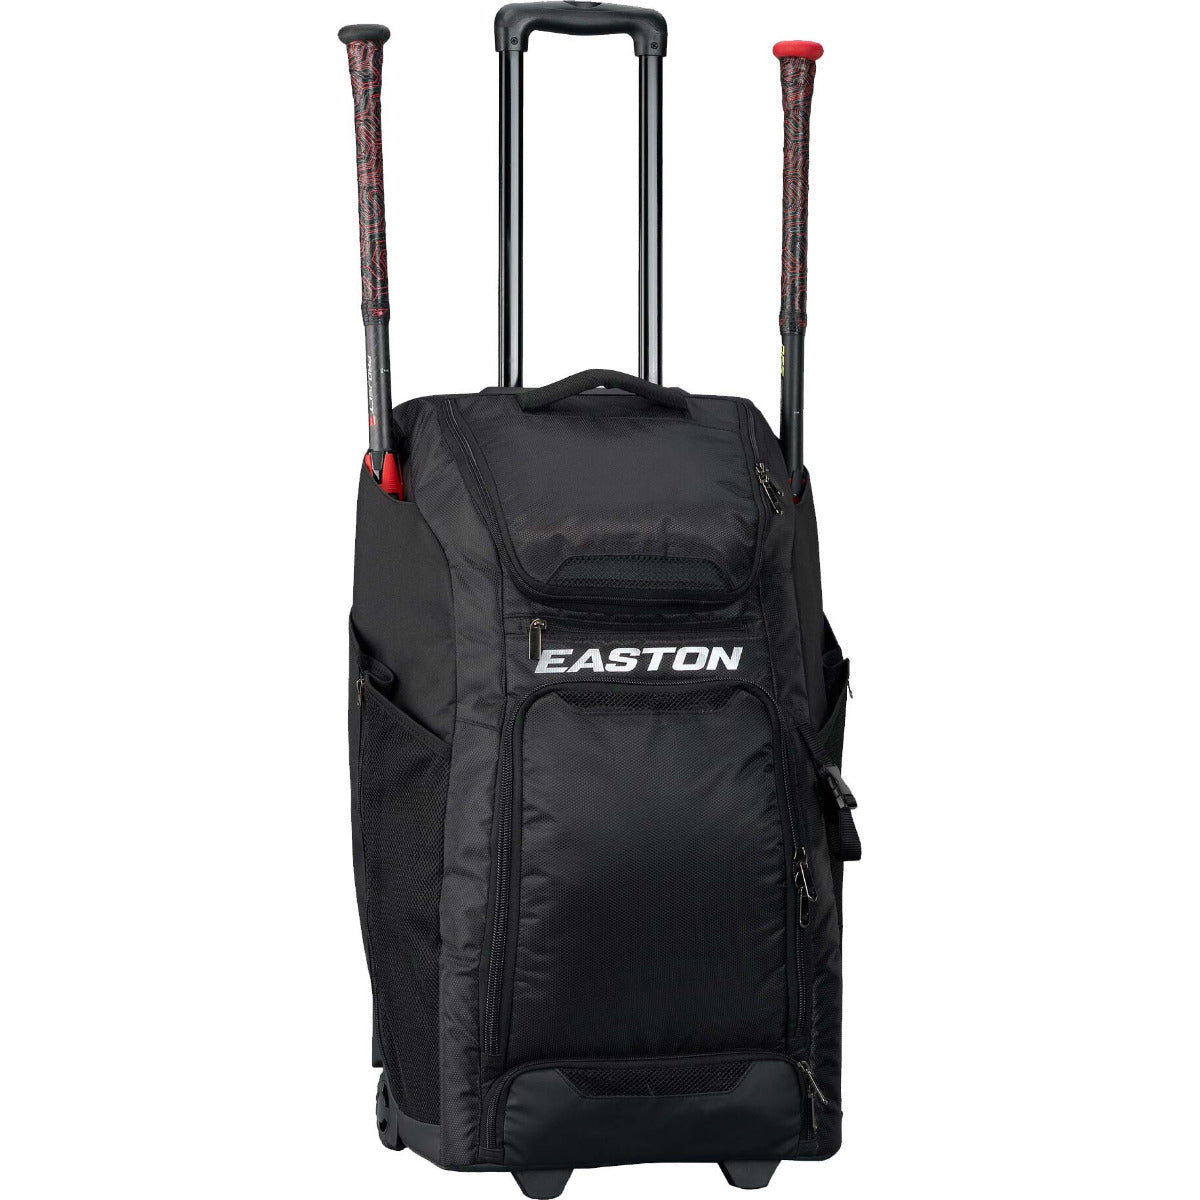 Easton Catchers Bat & Equipment Wheeled Bag